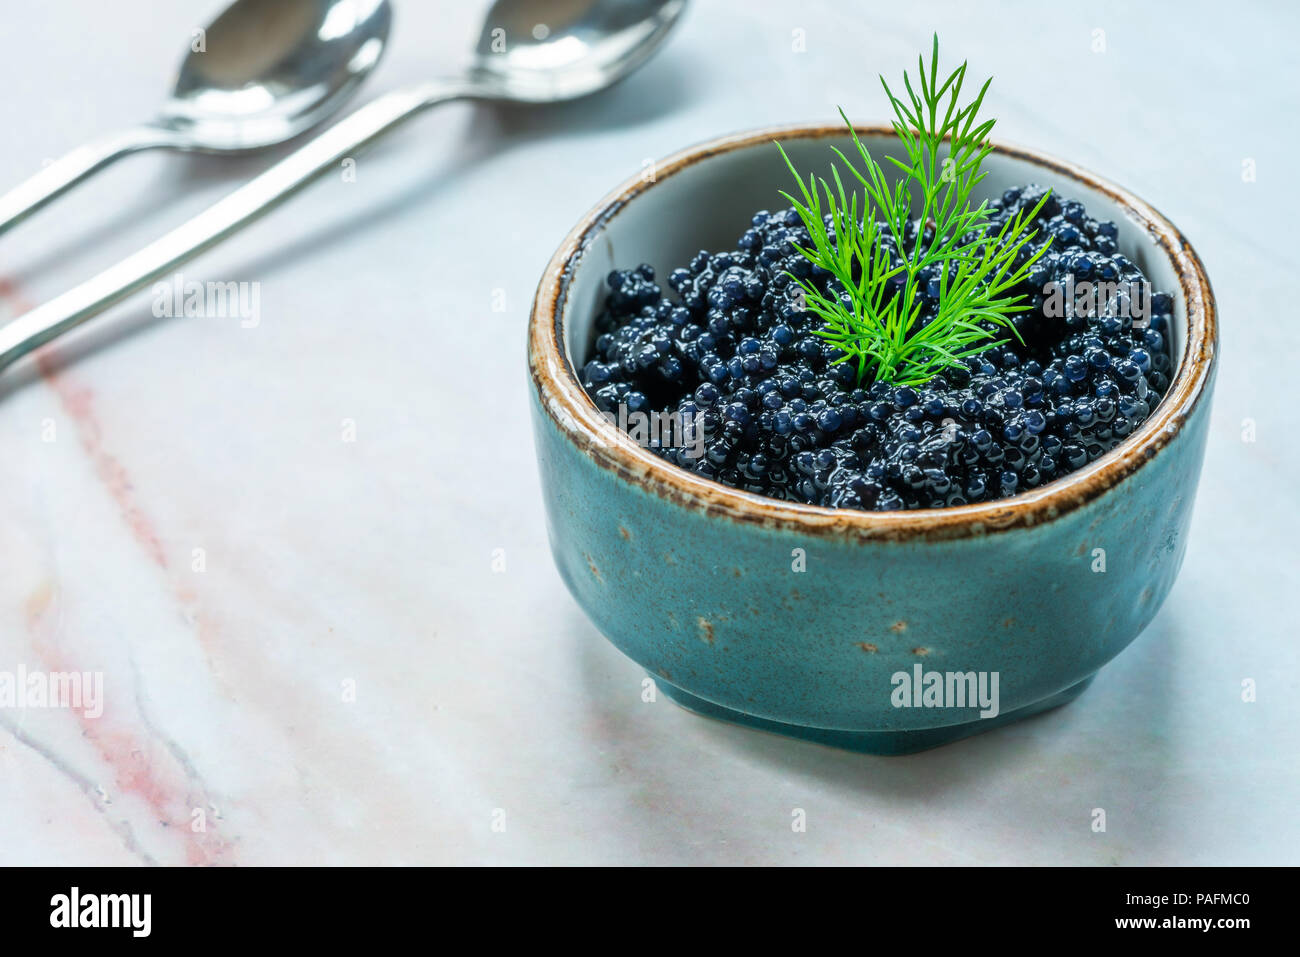 Black lumpfish caviar in a small pot Stock Photo